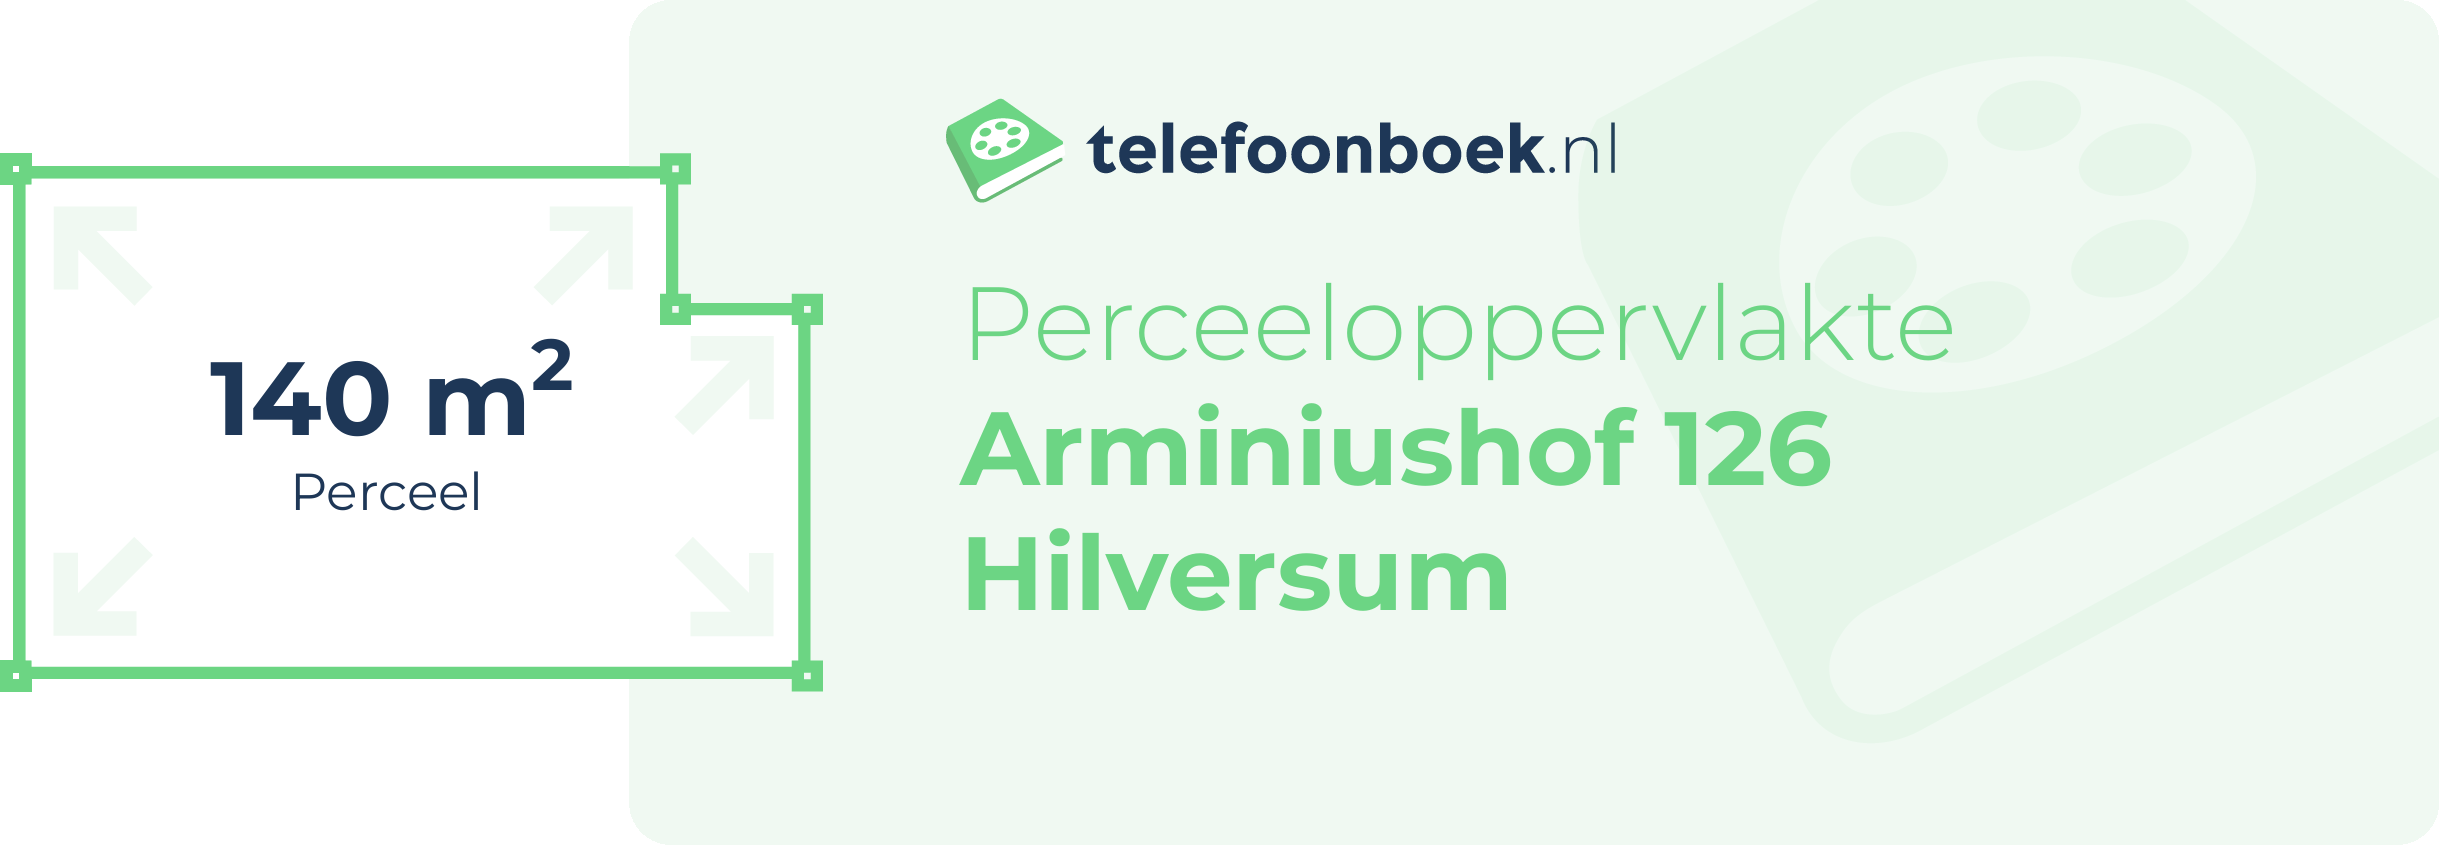 Perceeloppervlakte Arminiushof 126 Hilversum